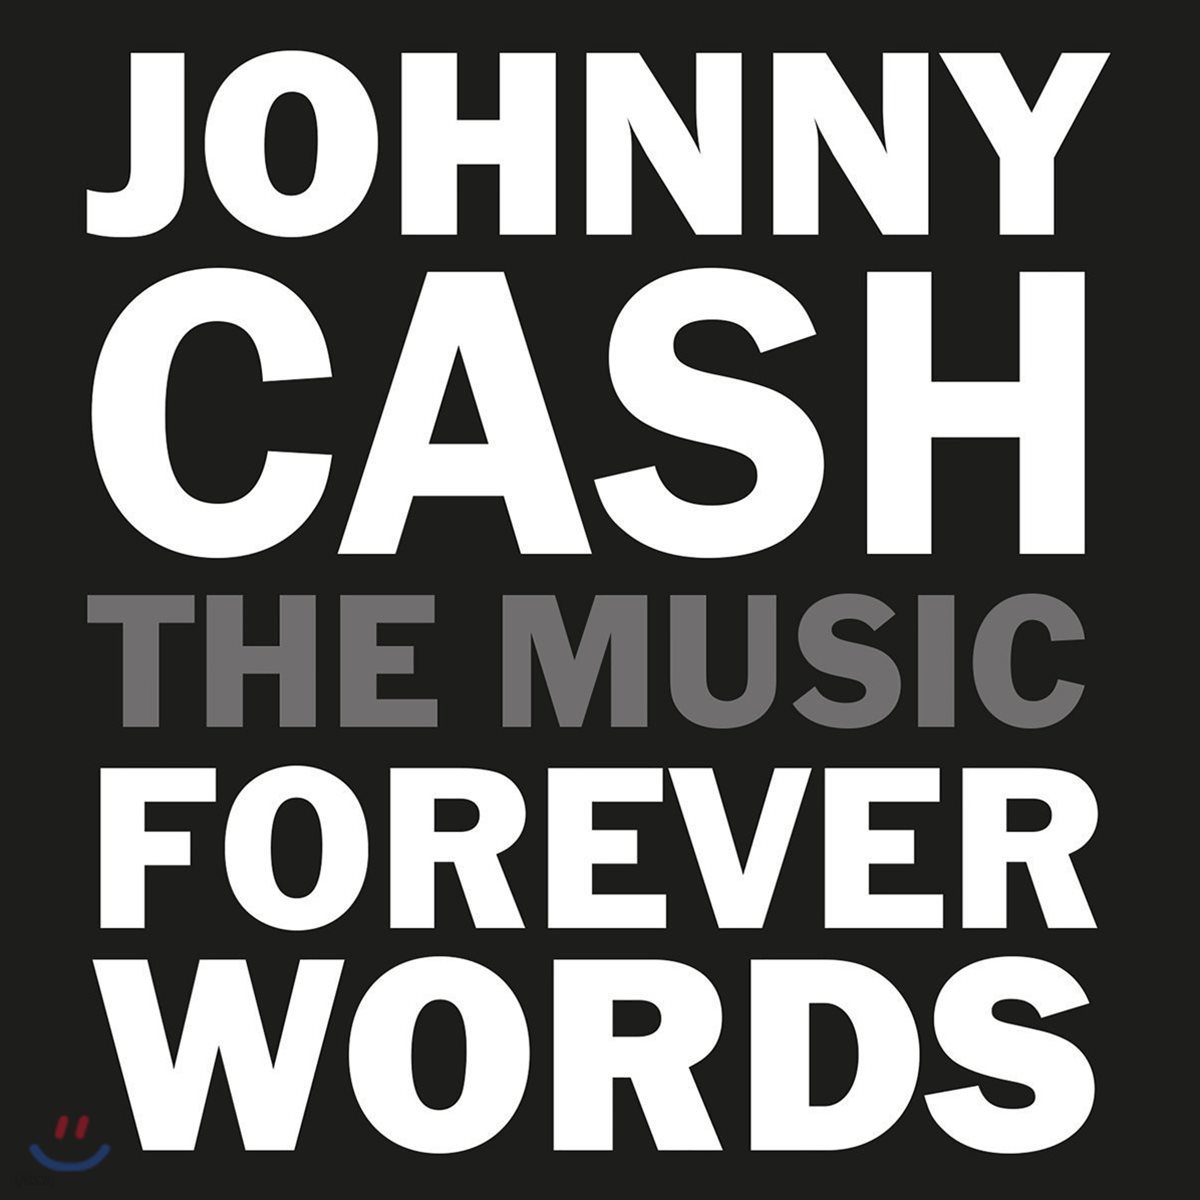 Johnny Cash: Forever Words 조니 캐쉬의 미발표 시집을 노래한 앨범